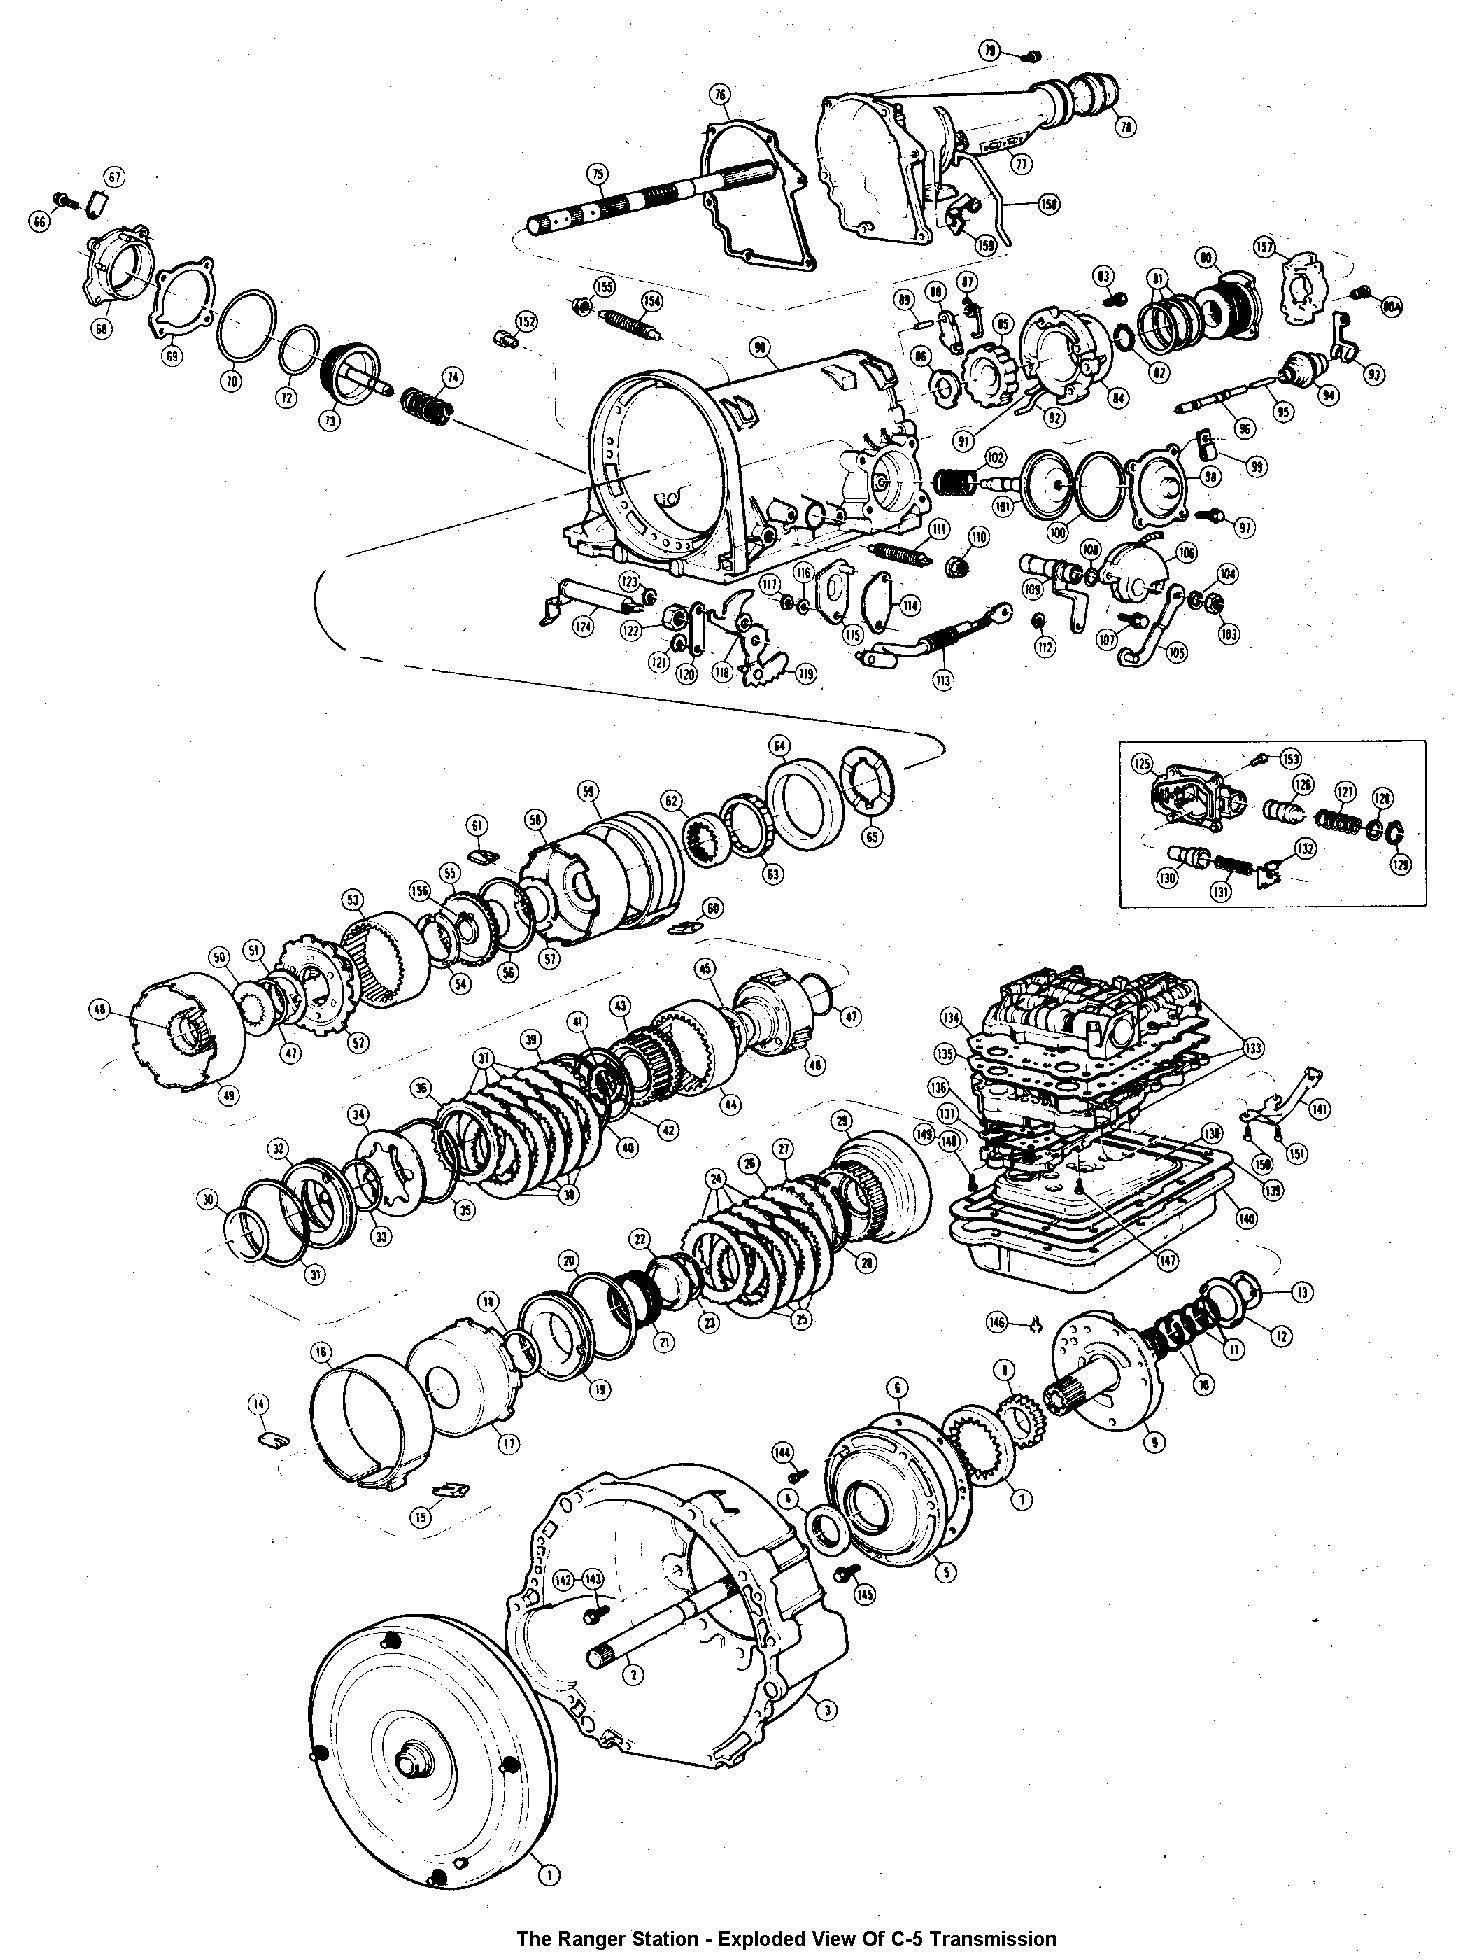 1996 ford Ranger Engine Diagram ford Ranger Automatic Transmission Identification Of 1996 ford Ranger Engine Diagram